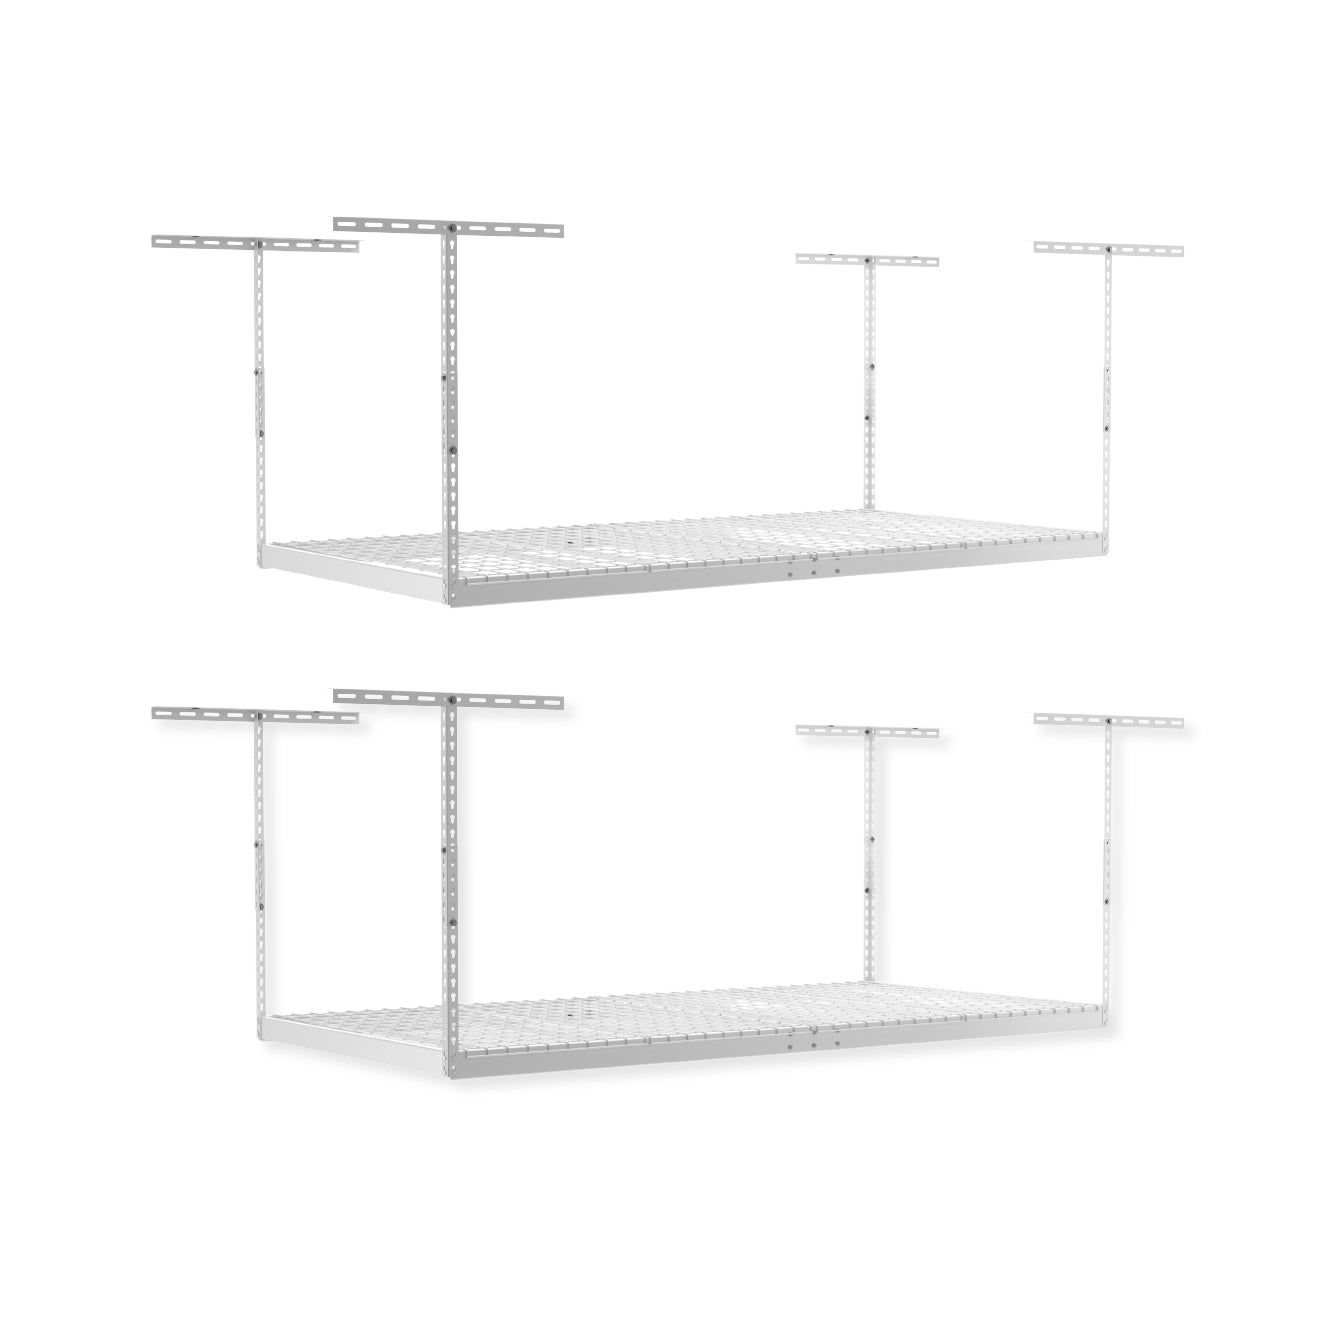 4’ x 8’ Overhead Garage Storage Rack Two Pack - White